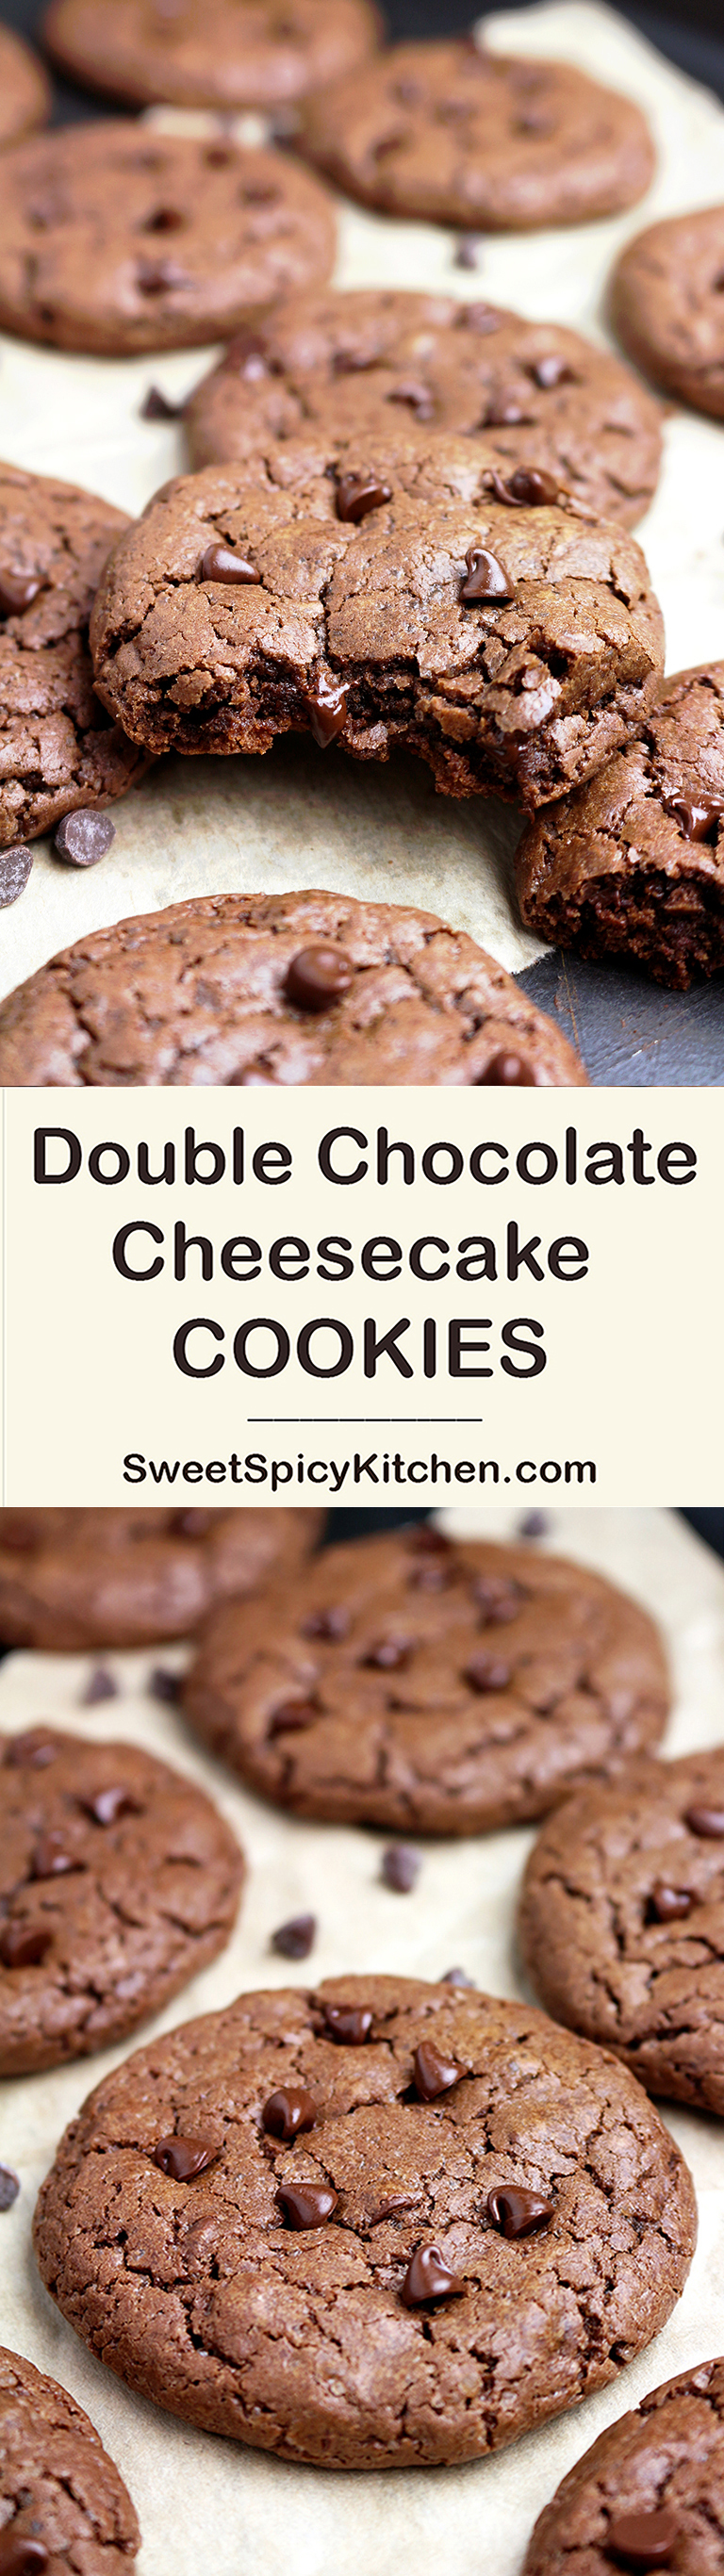 Double Chocolate Cheesecake Cookies